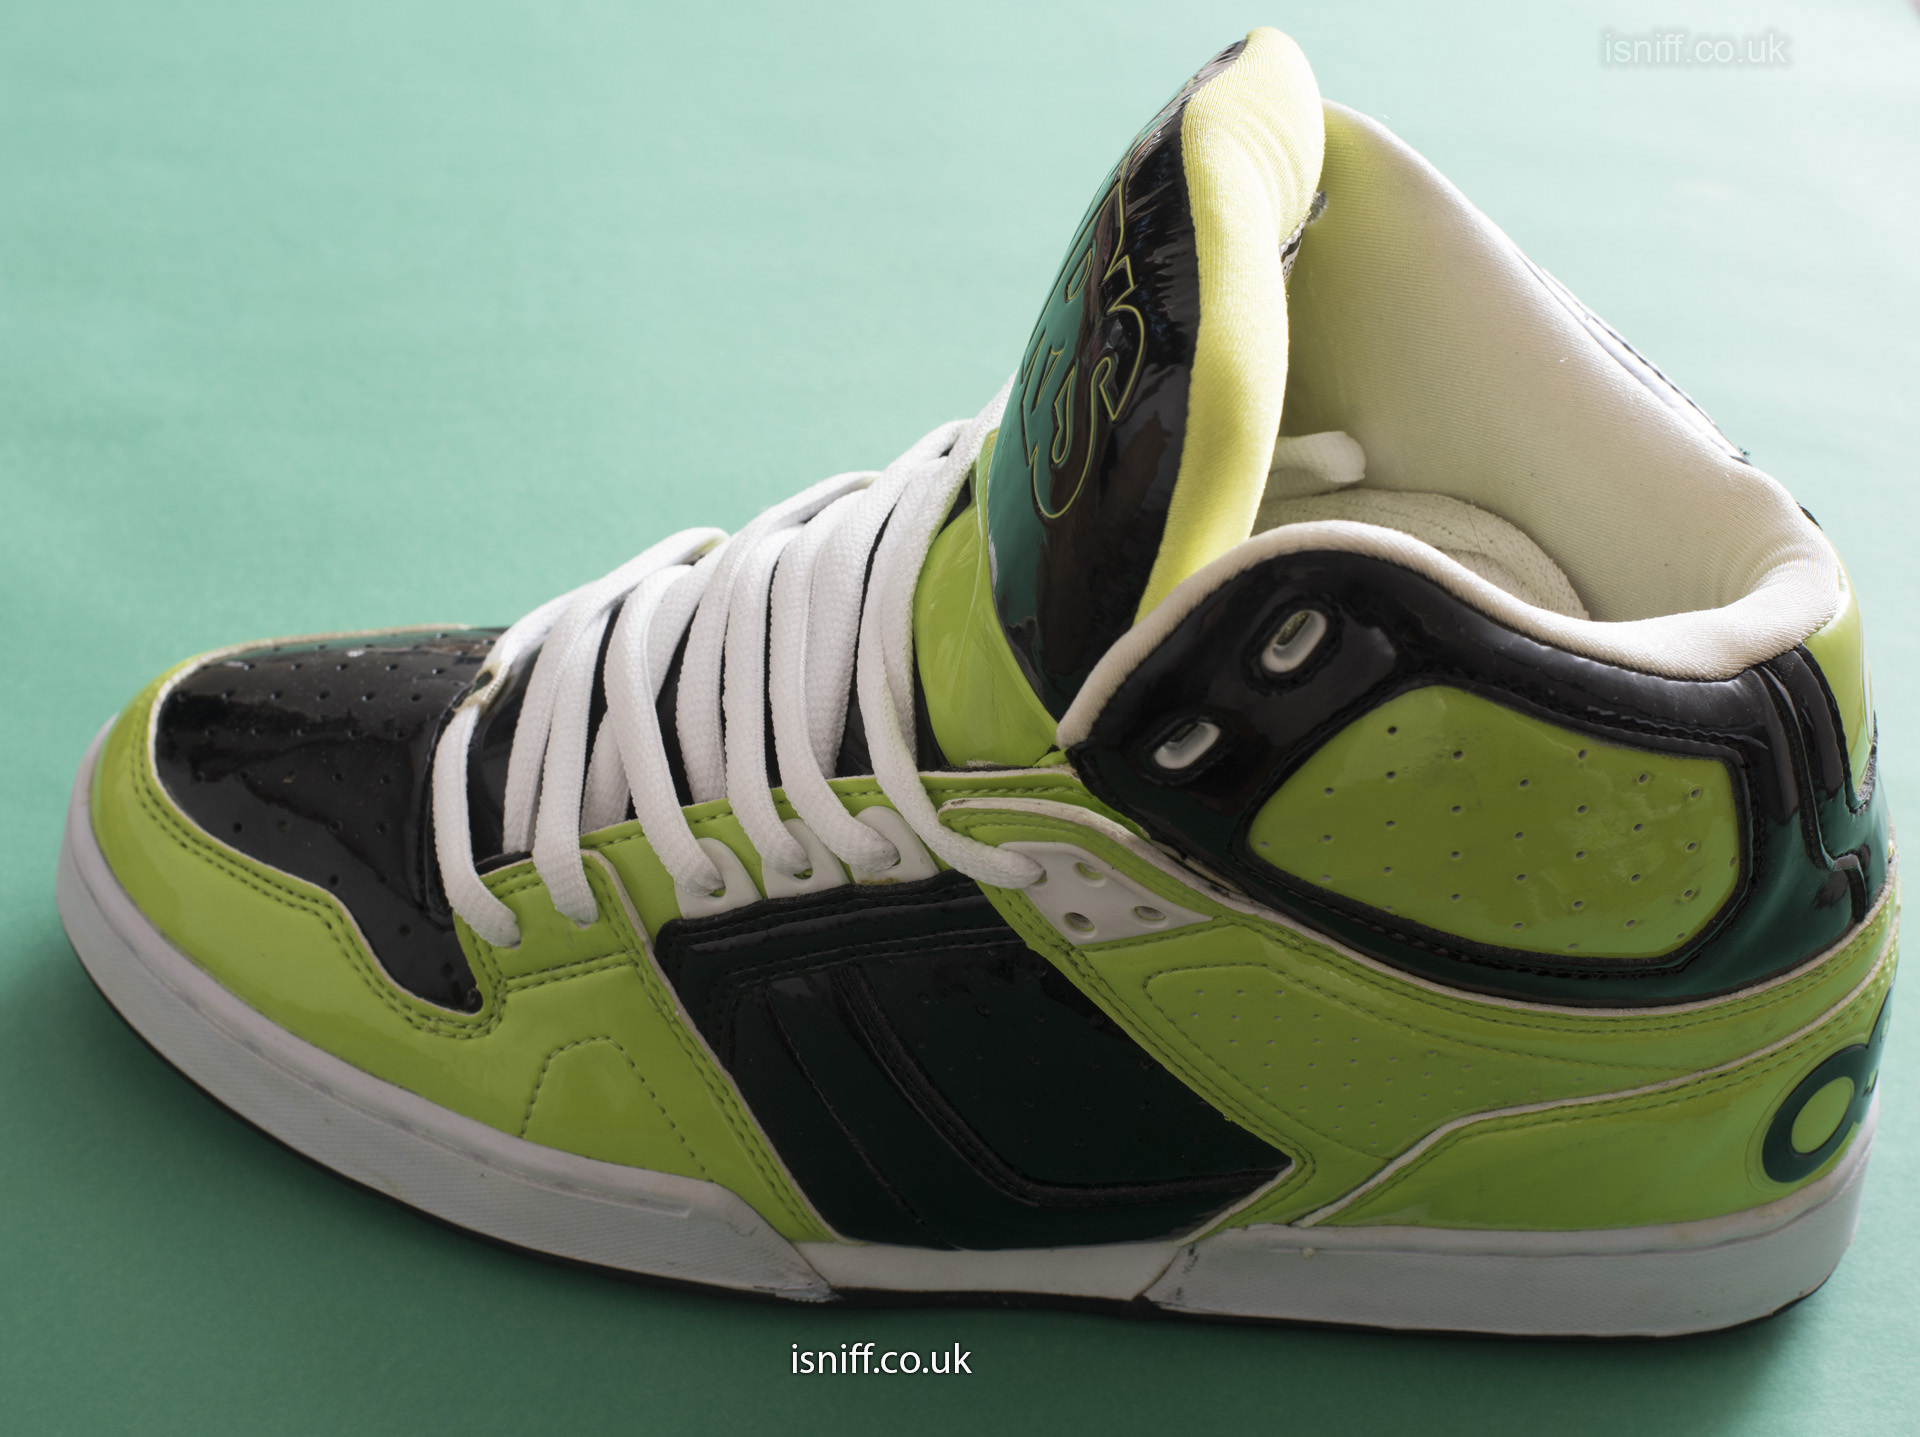 osiris shoes lime green